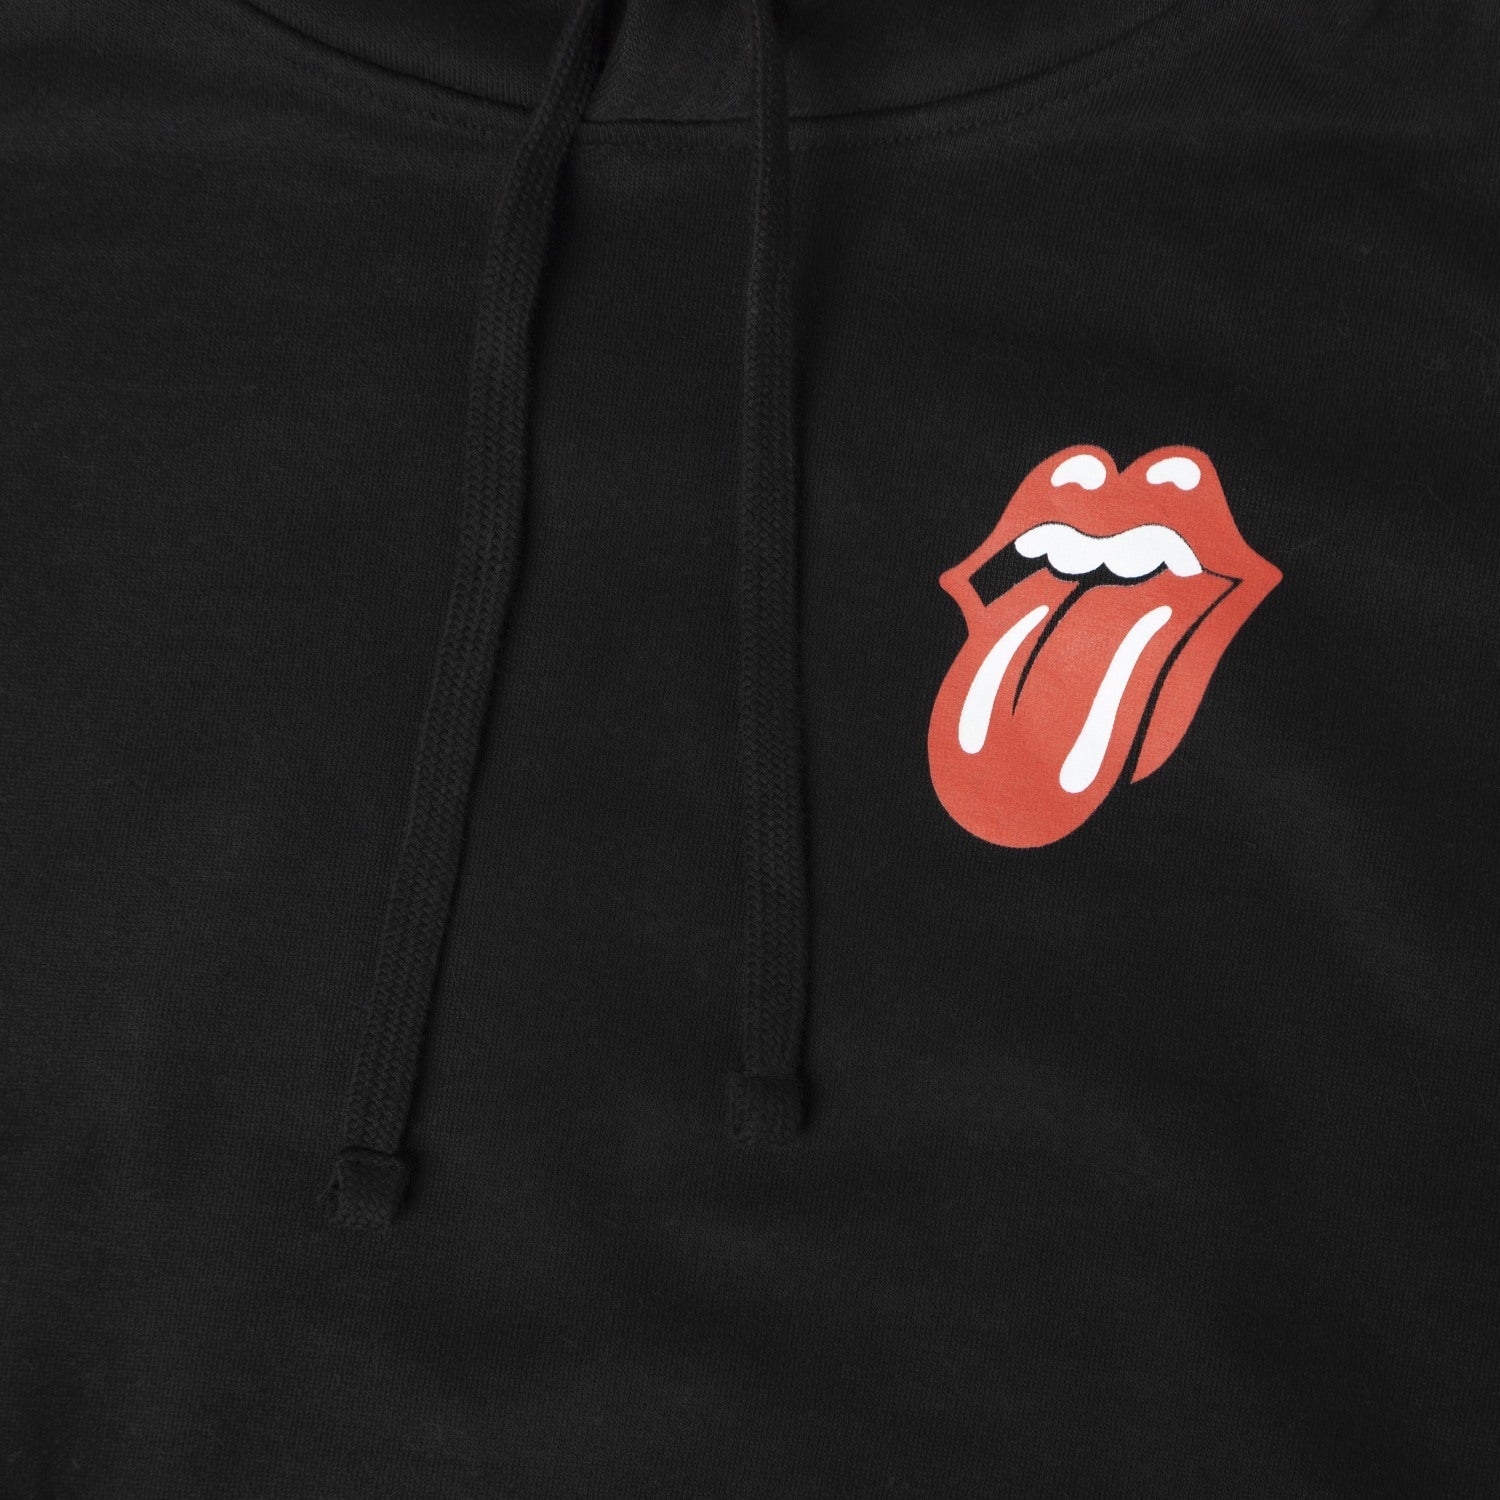 Rolling Stones x TGR "Lick" Heavyweight Hoodie - Teton Gravity Research